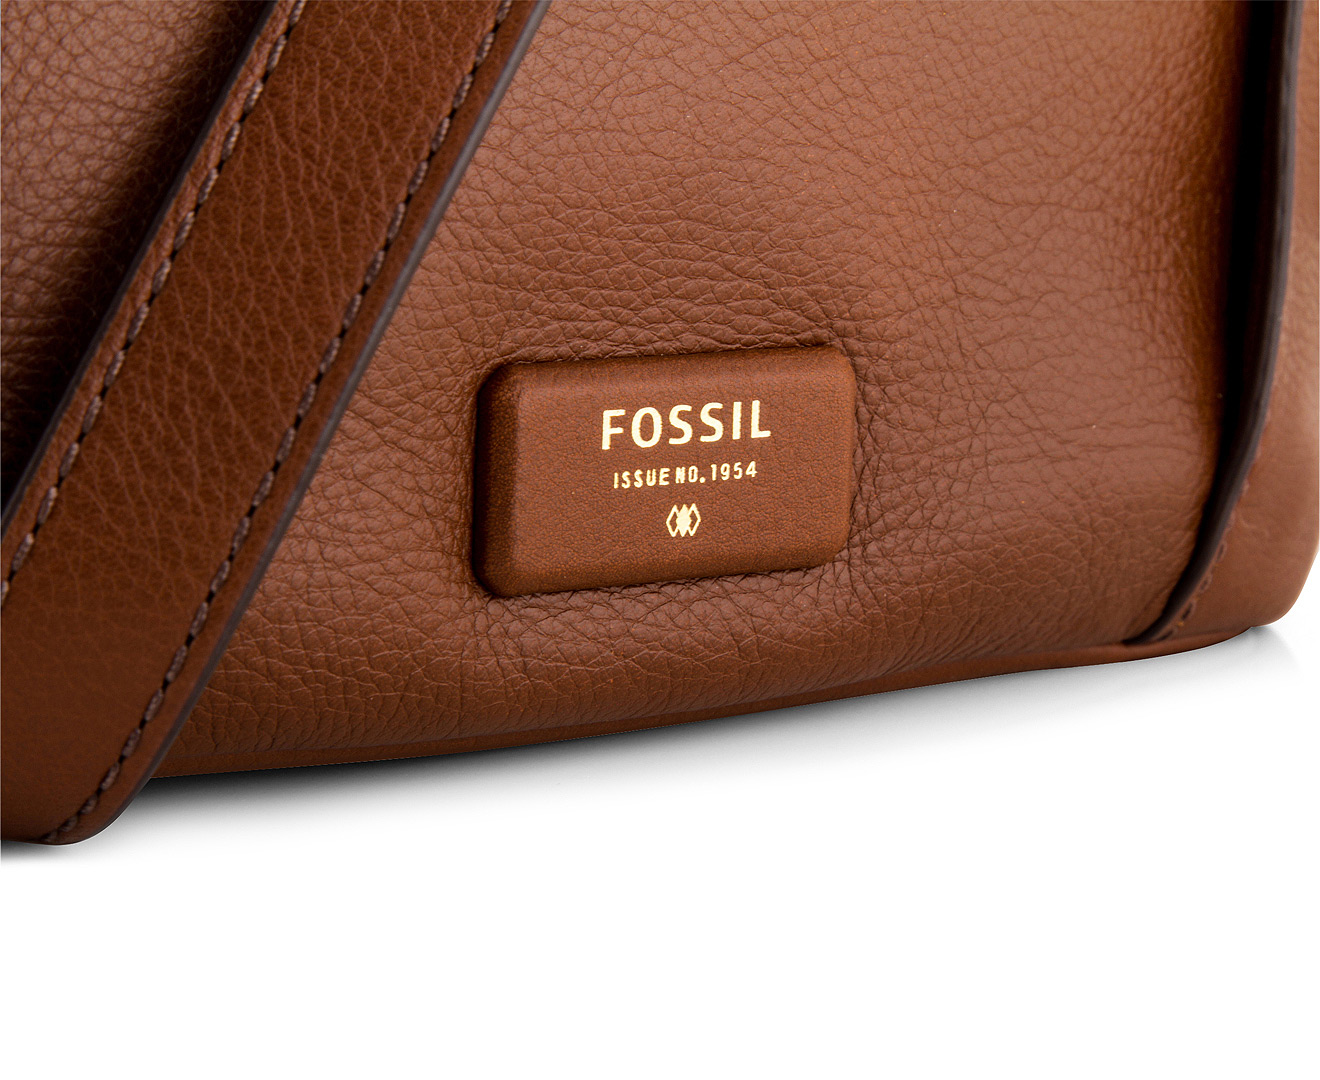 FOSSIL | Sydney Satchel Medium Brown Bag | Great Bag For Less - YouTube